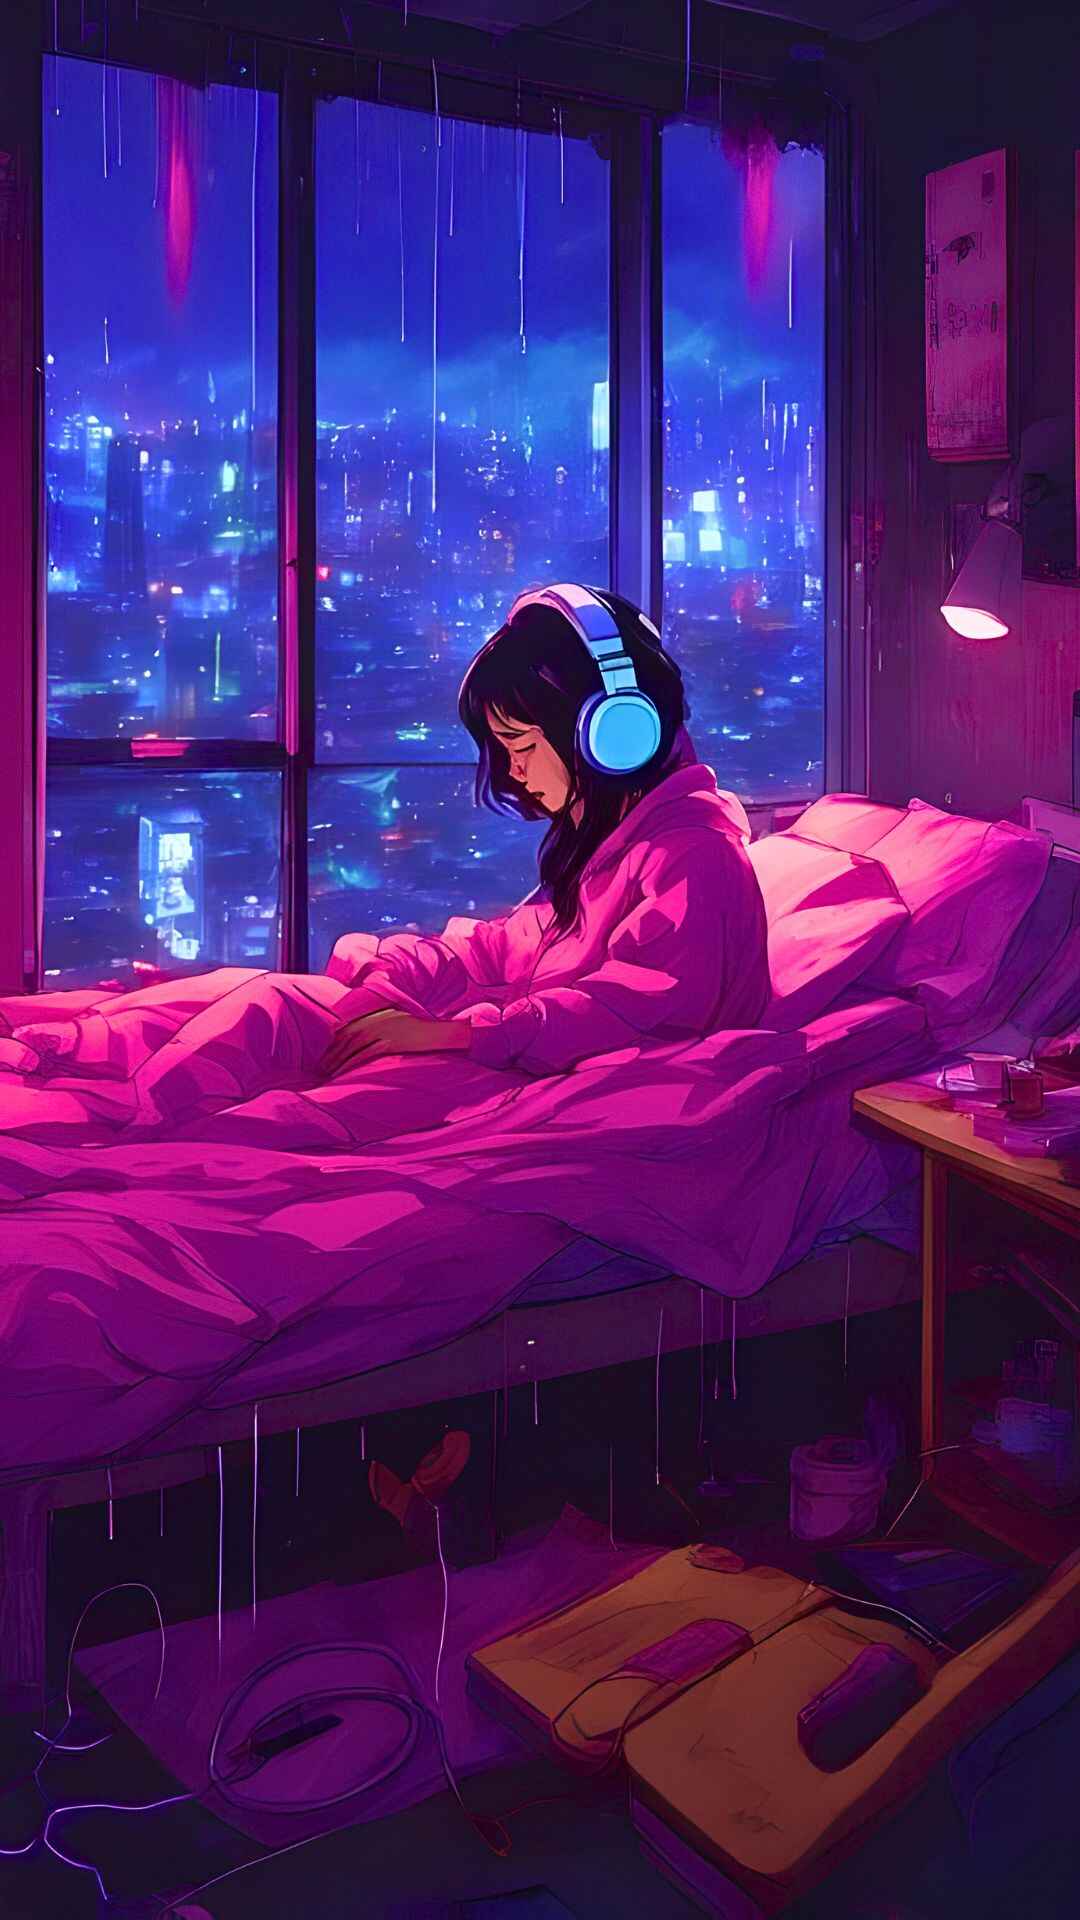 Cool Anime Girl With Headphones Wallpaper